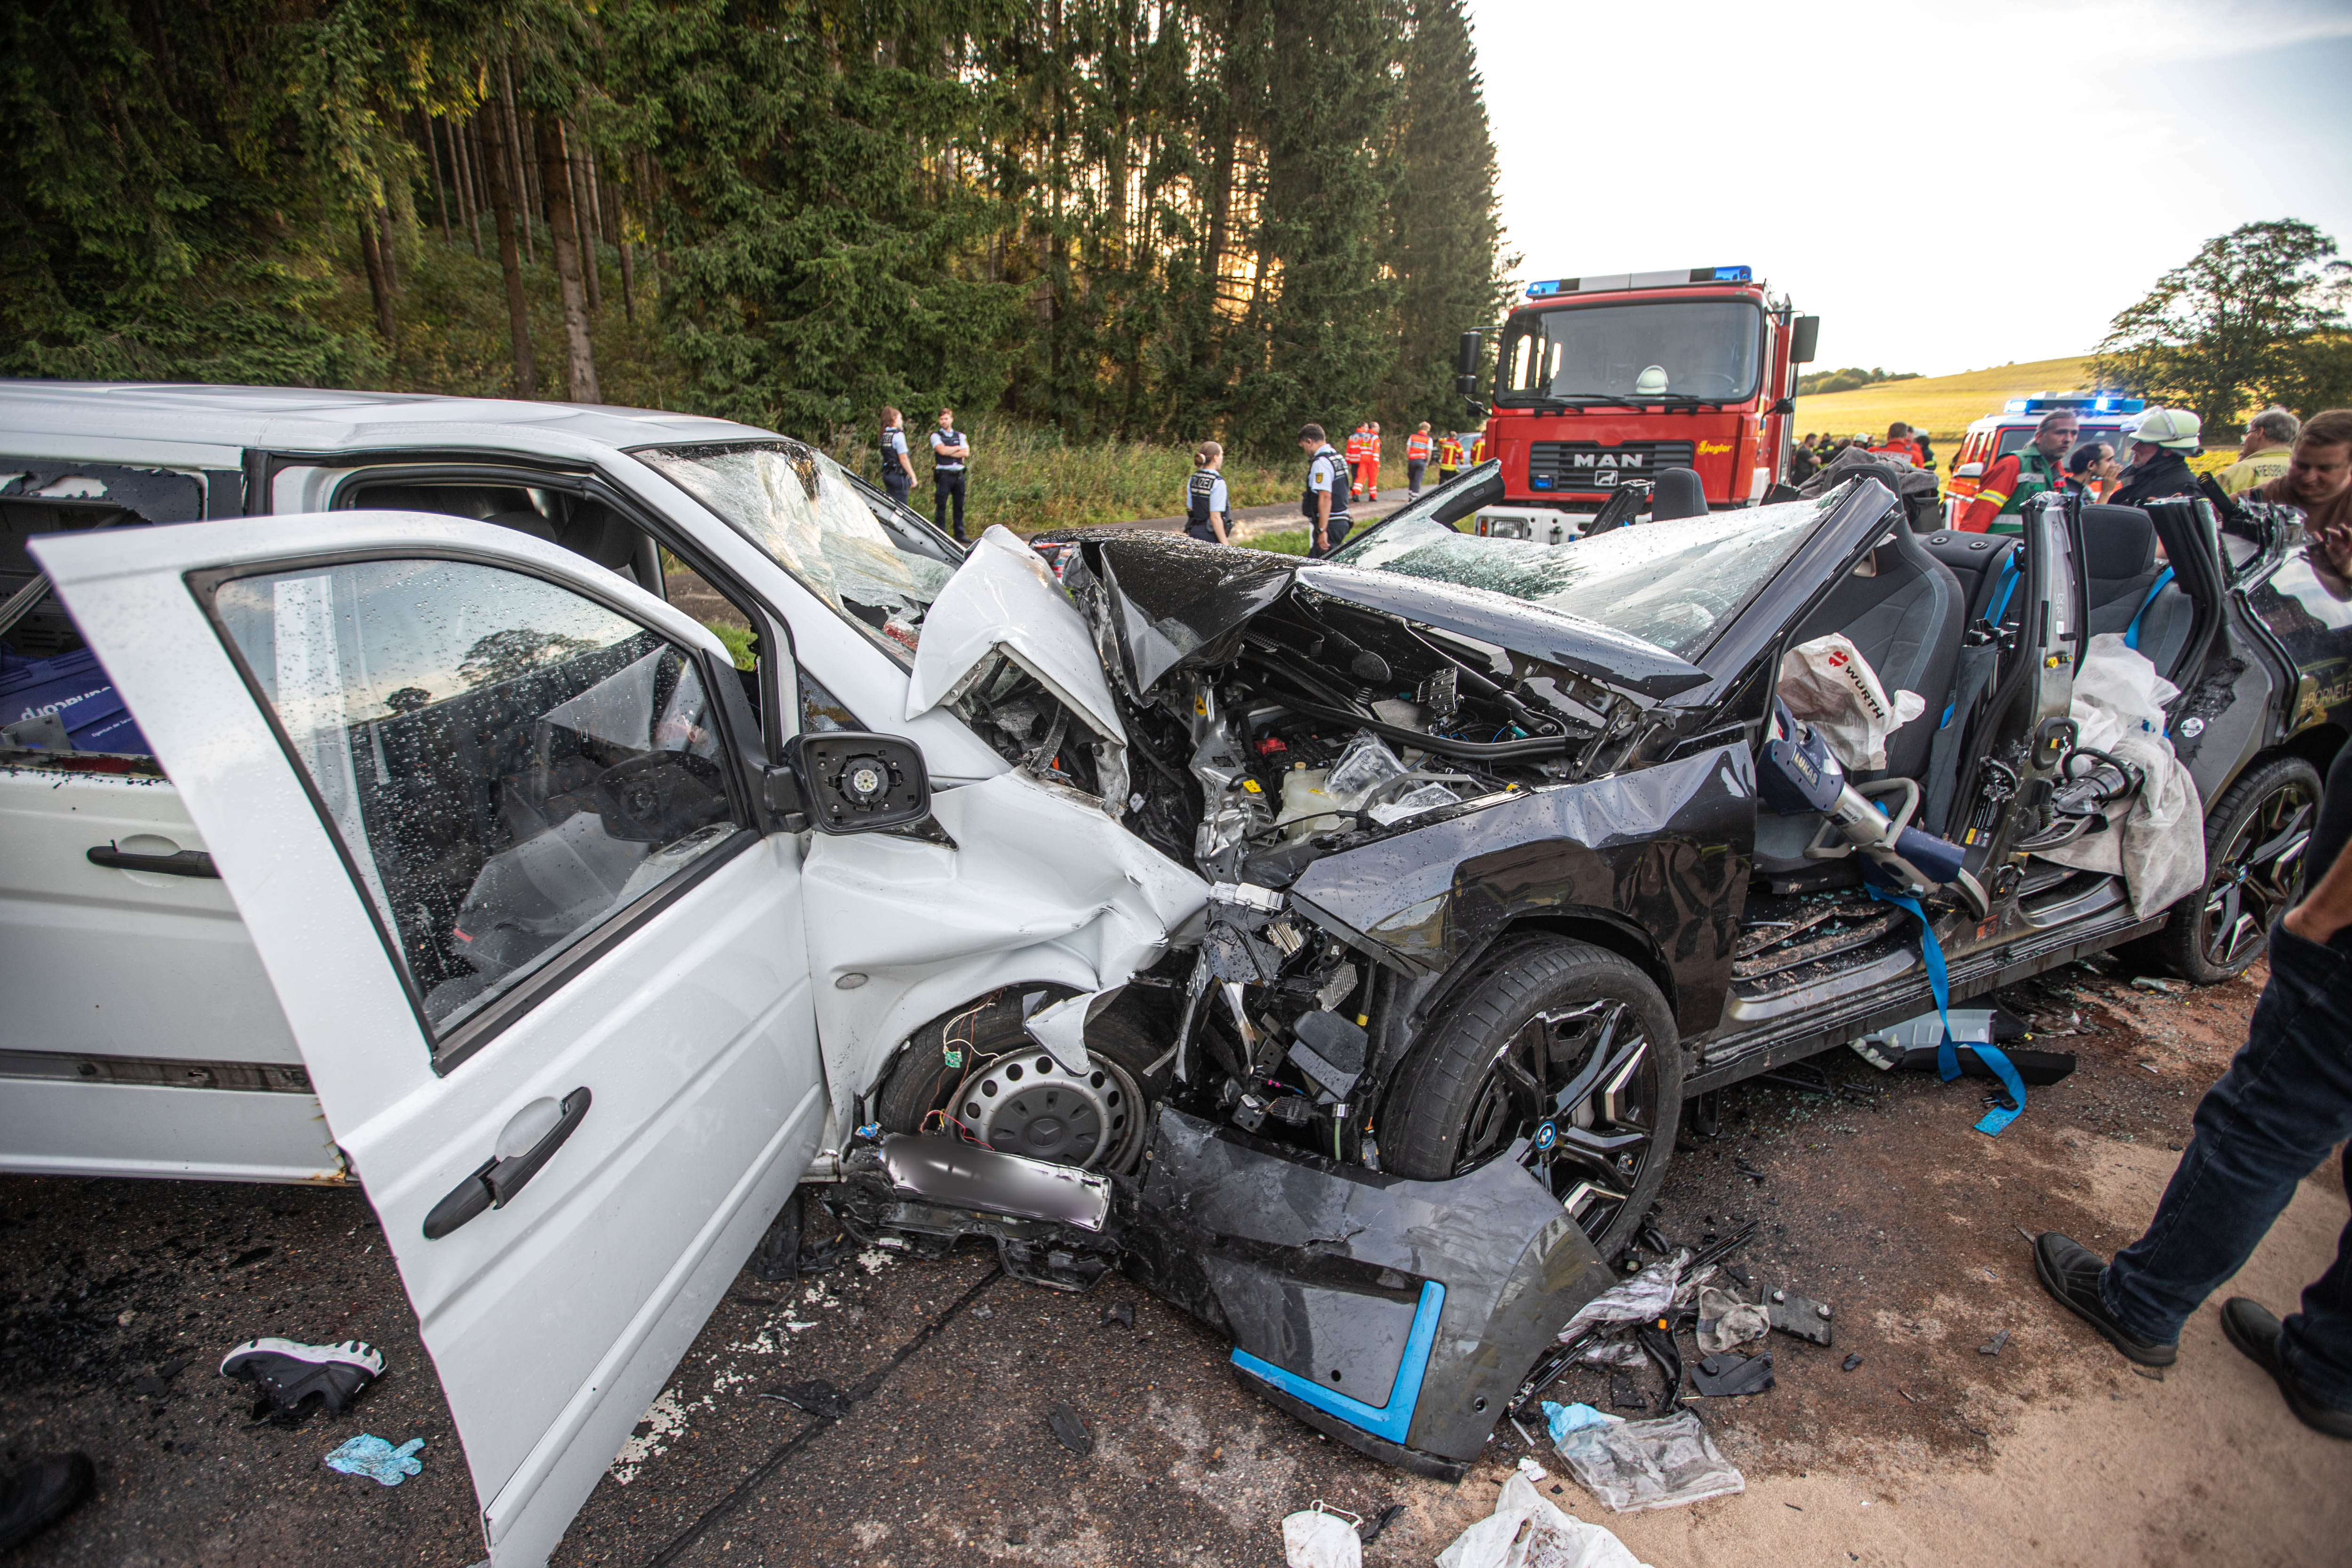 Beifahrerin will Fahrer korrigieren: Unfall auf A8 - Baden